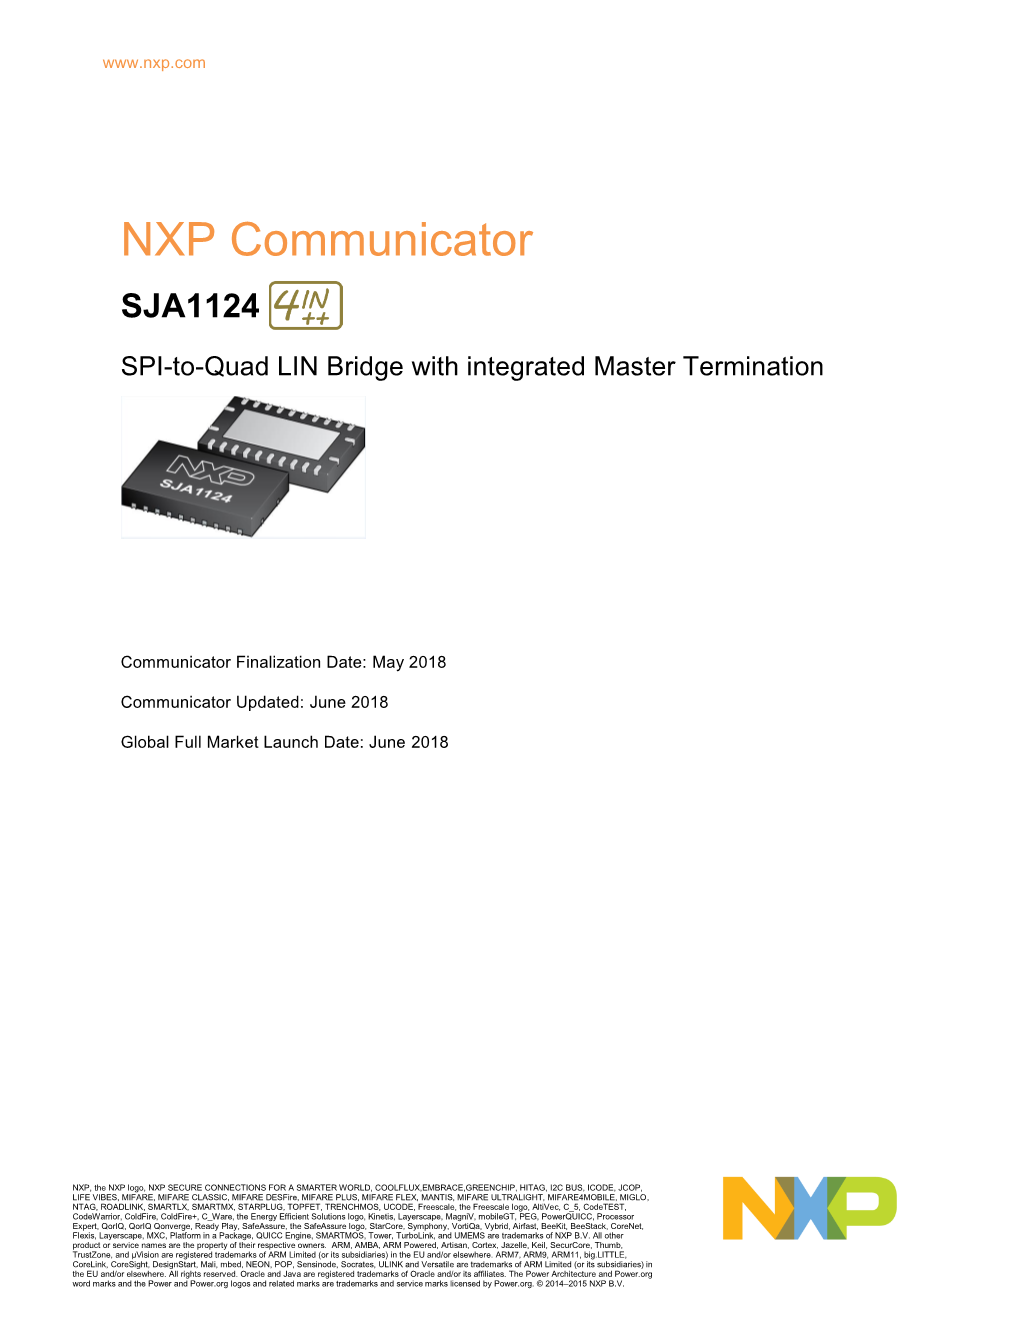 NXP Communicator SJA1124